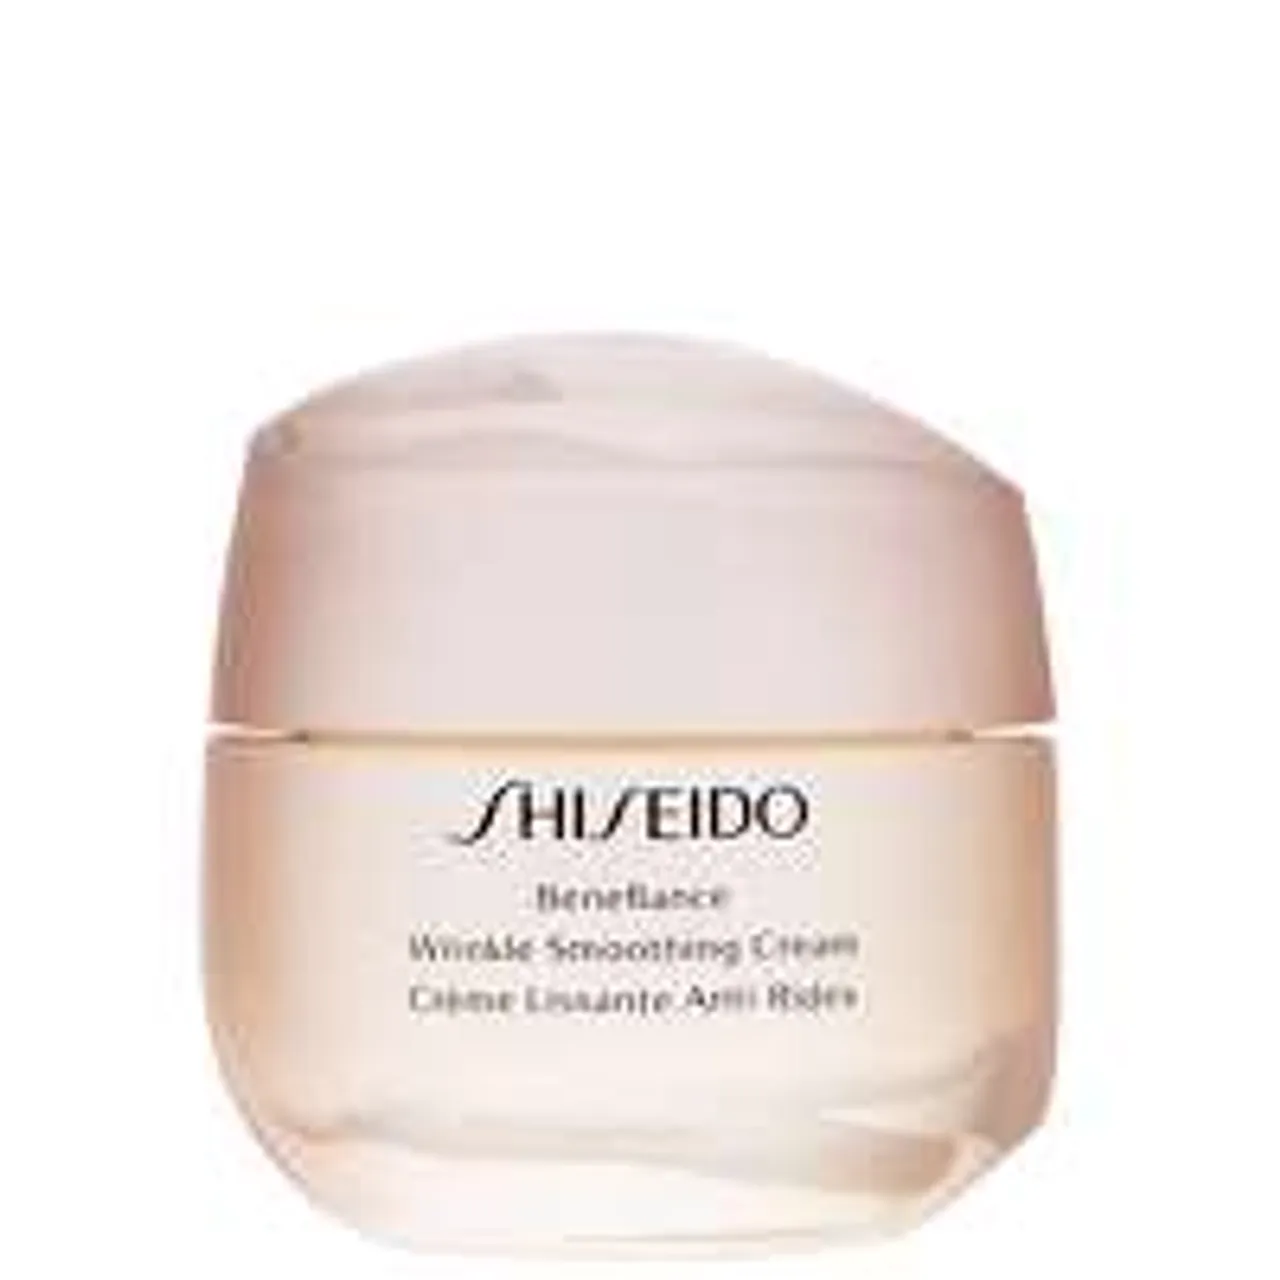 Shiseido Day And Night Creams Benefiance: Wrinkle Smoothing Cream 50ml / 1.7 oz.